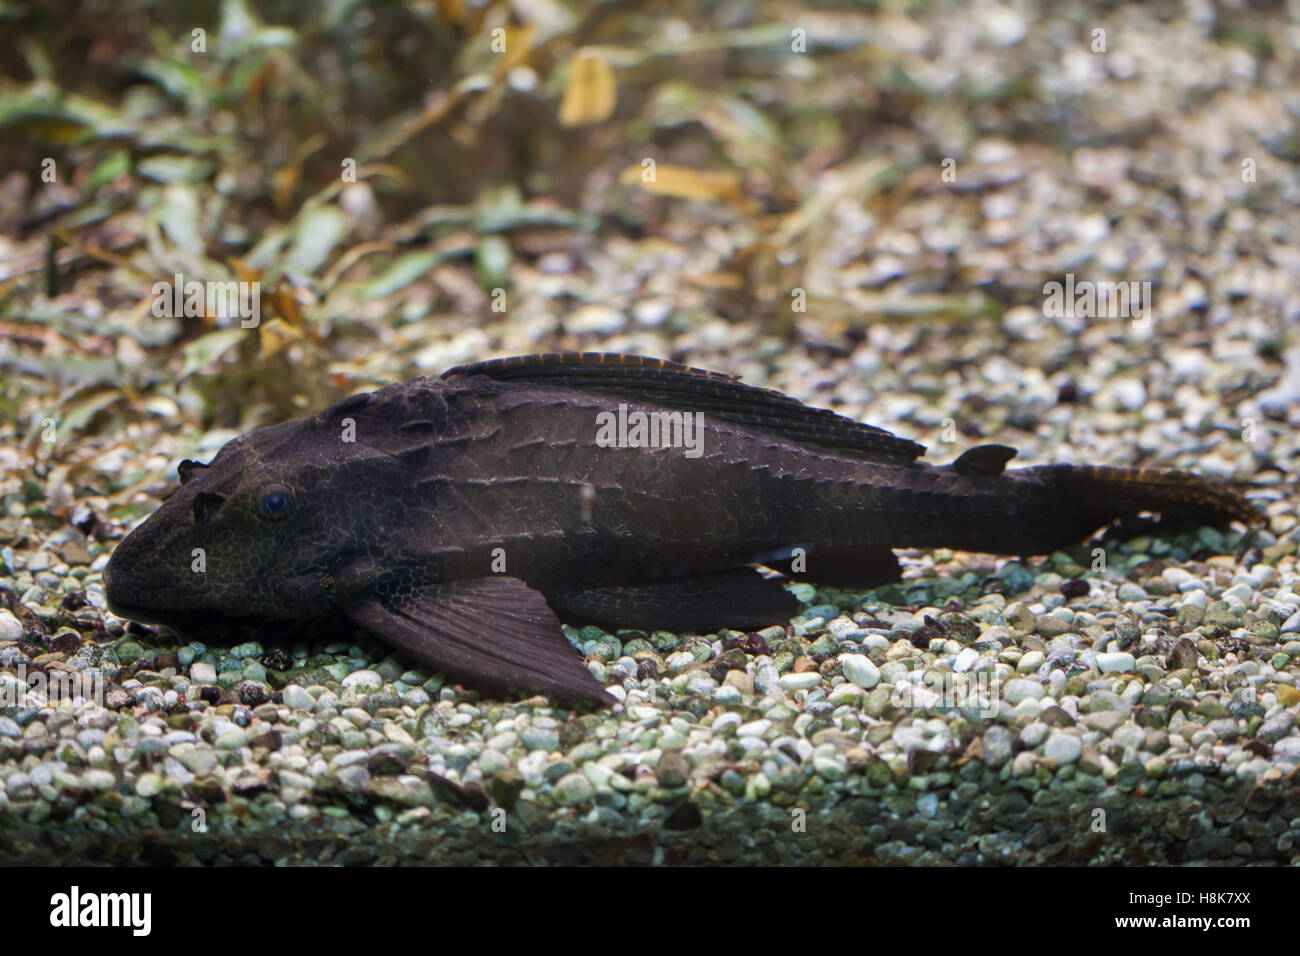 Adonis pleco (Acanthicus adonis). Freshwater fish. Stock Photo